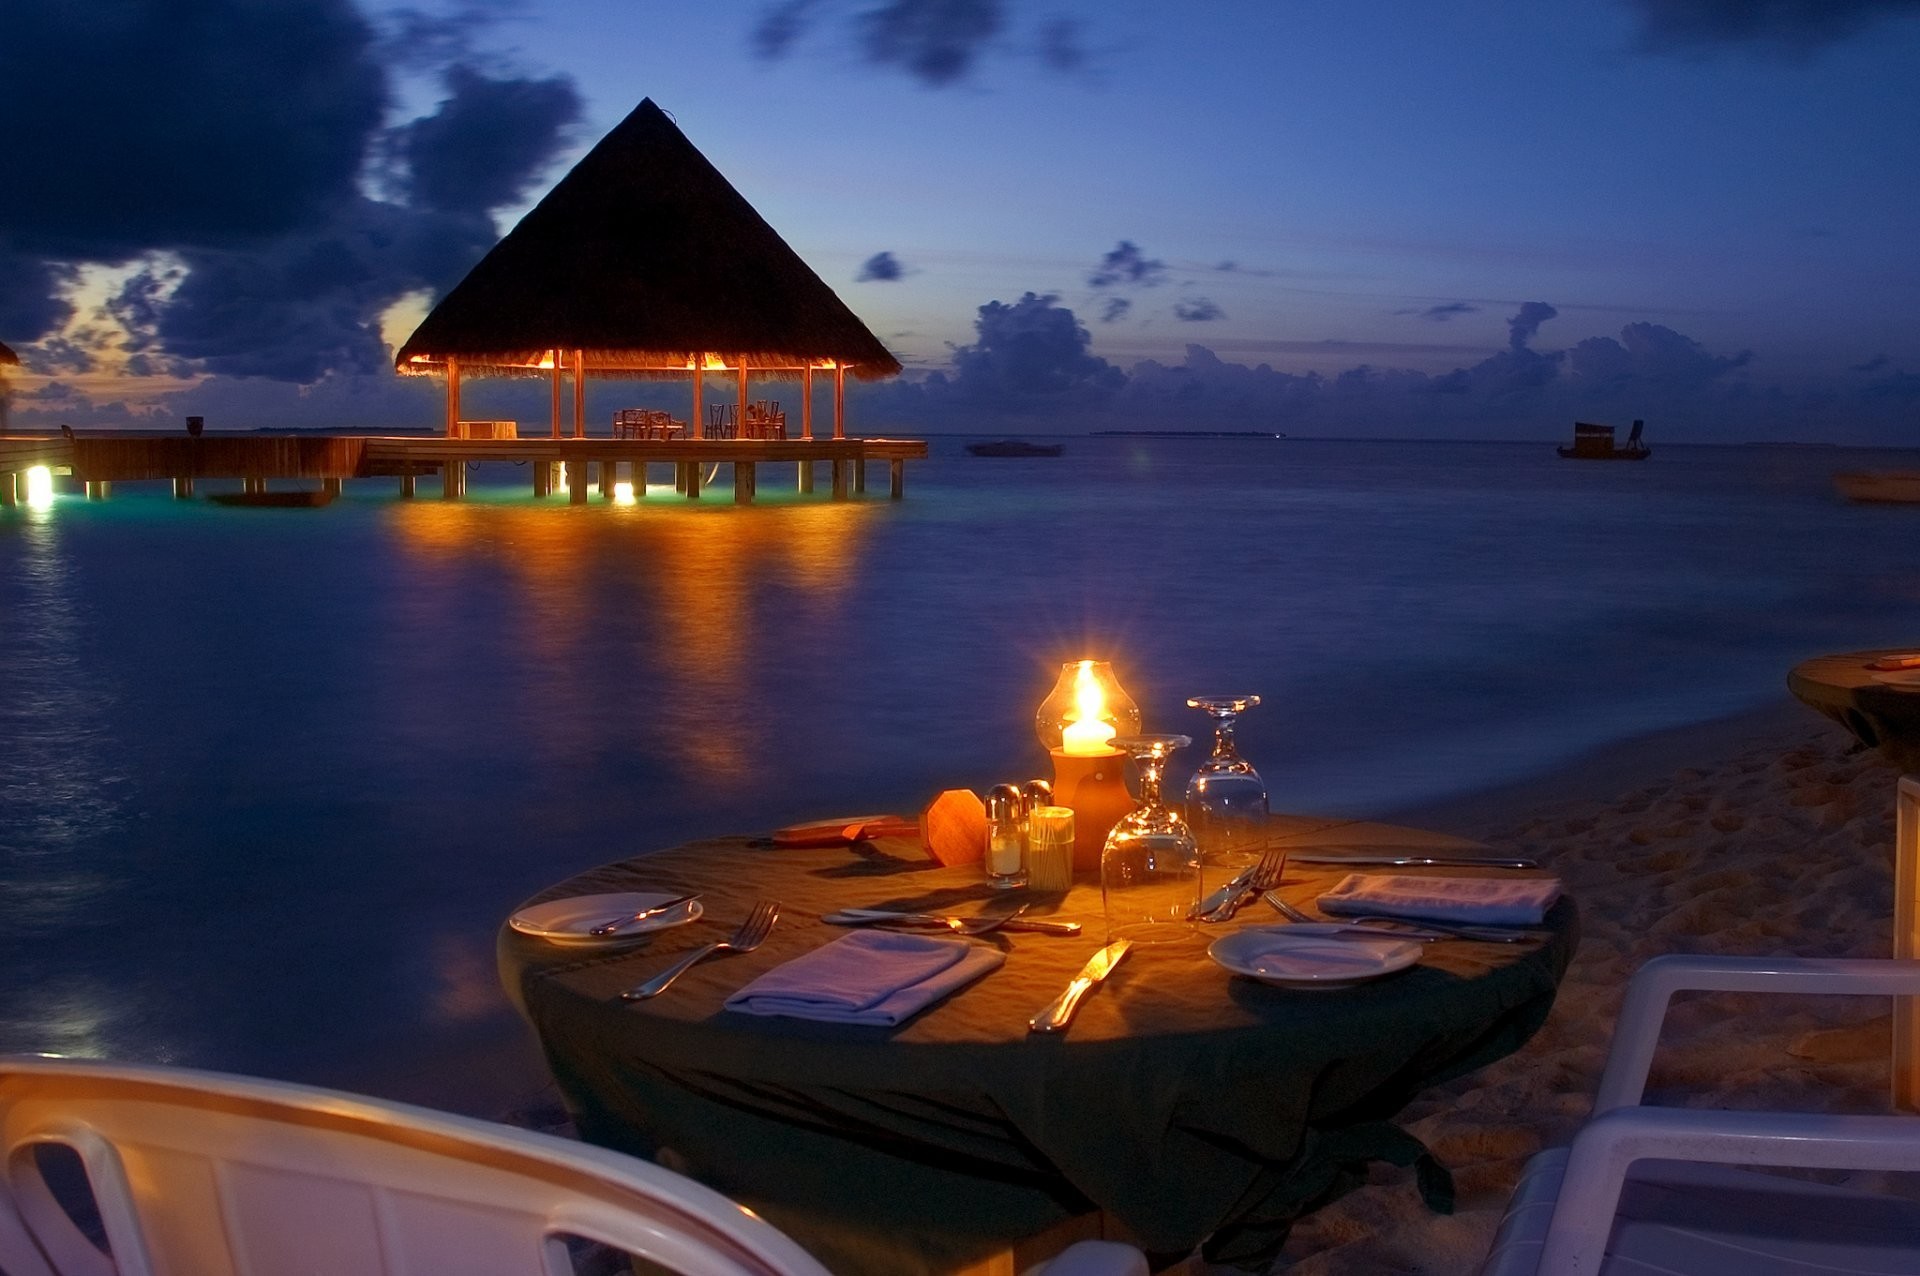 1920x1276 night beach dinner ocean romance sunset beach romantic dinner view